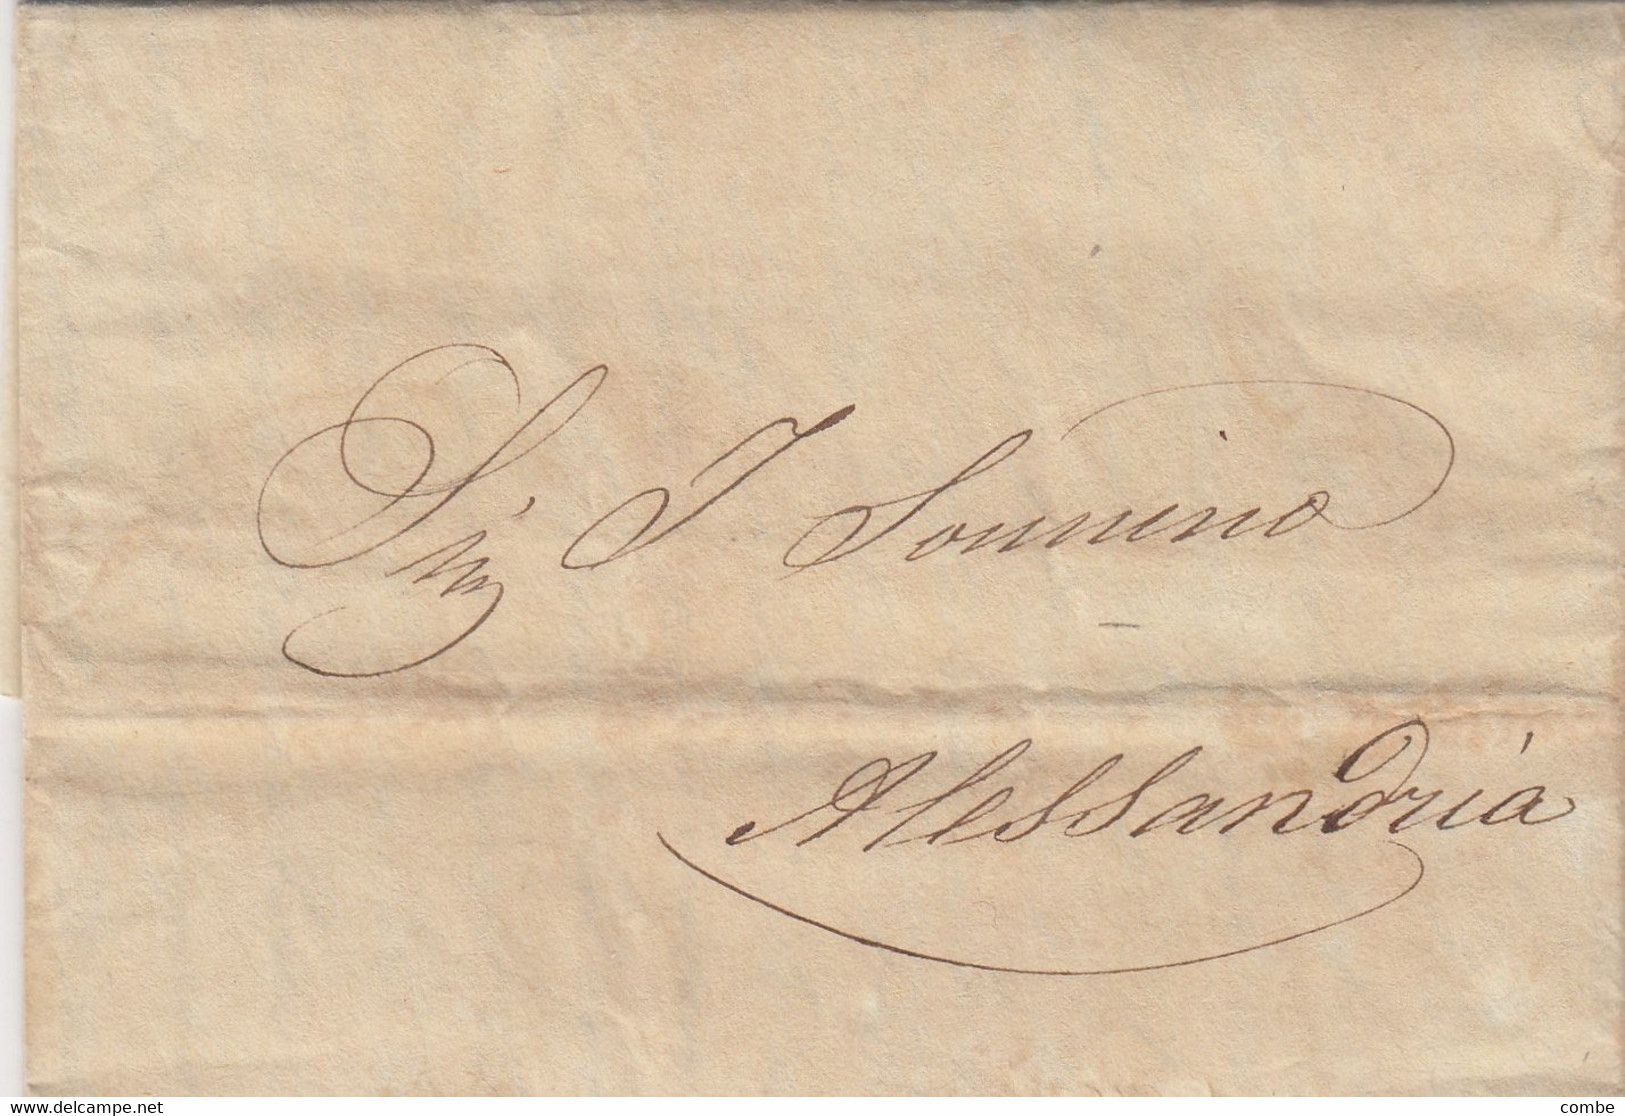 OLD LETTER. EGYPT. 6 2 1837. CAIRO TO J. SONNINO, ALESSANDRIA. TEXT IN ITALIAN - Préphilatélie